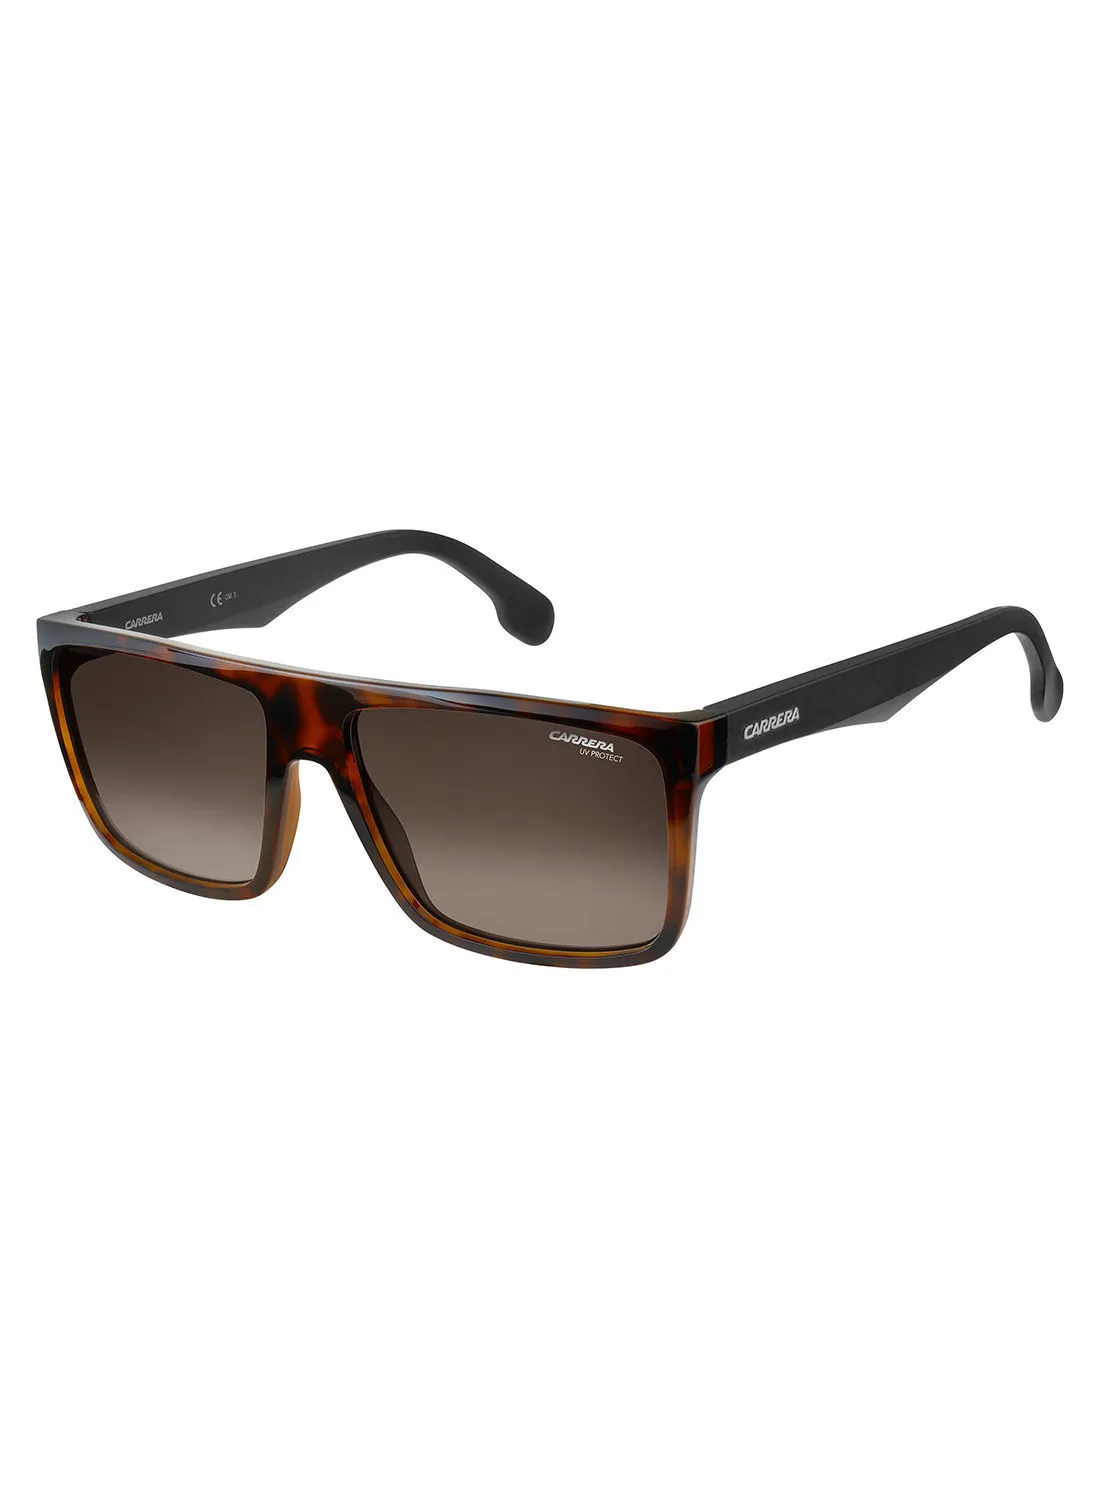 CARRERA UV Protection Rectangular Eyewear Sunglasses CARRERA 5039/S  HVN MTBLK 58